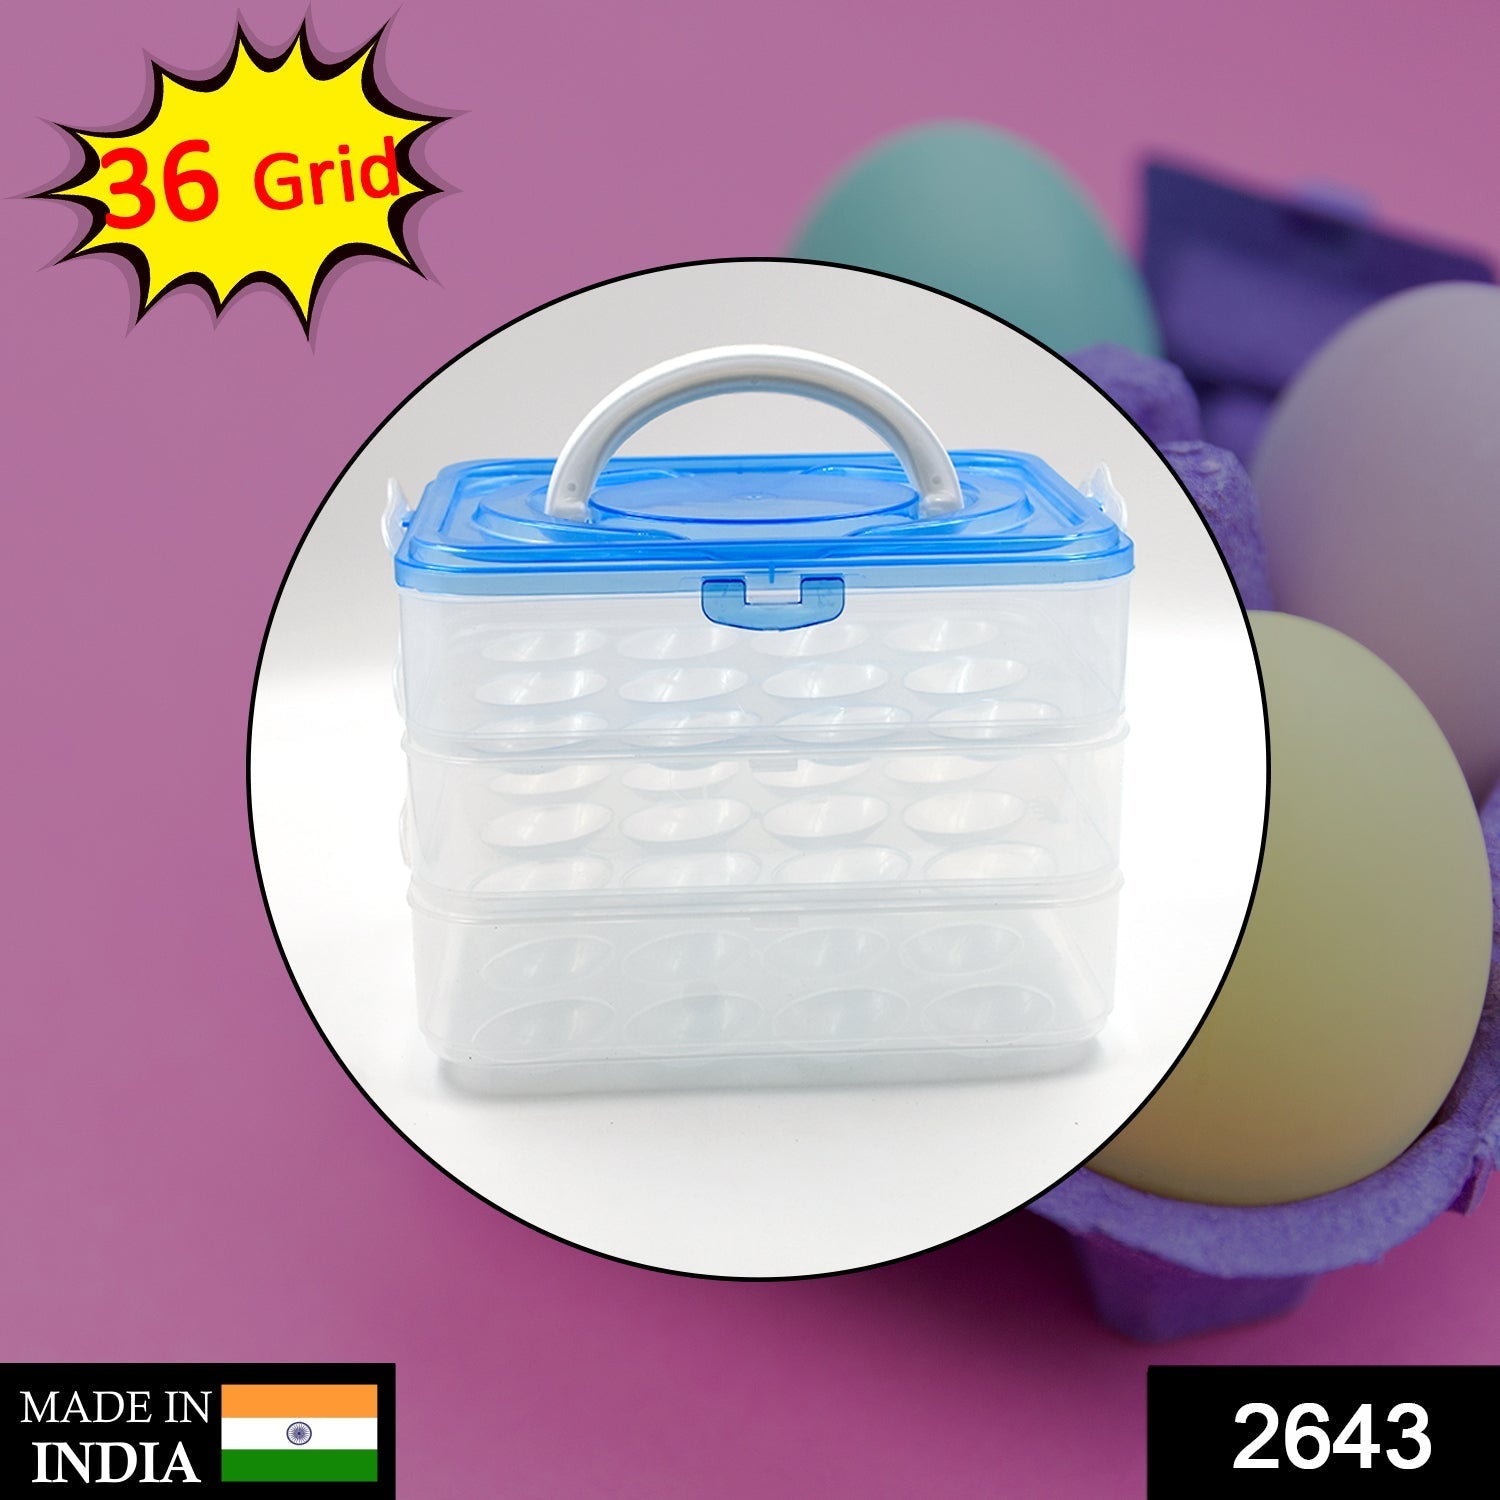 2643 3-Layer Plastic Refrigerator Egg Storage Box (36 Grid) 